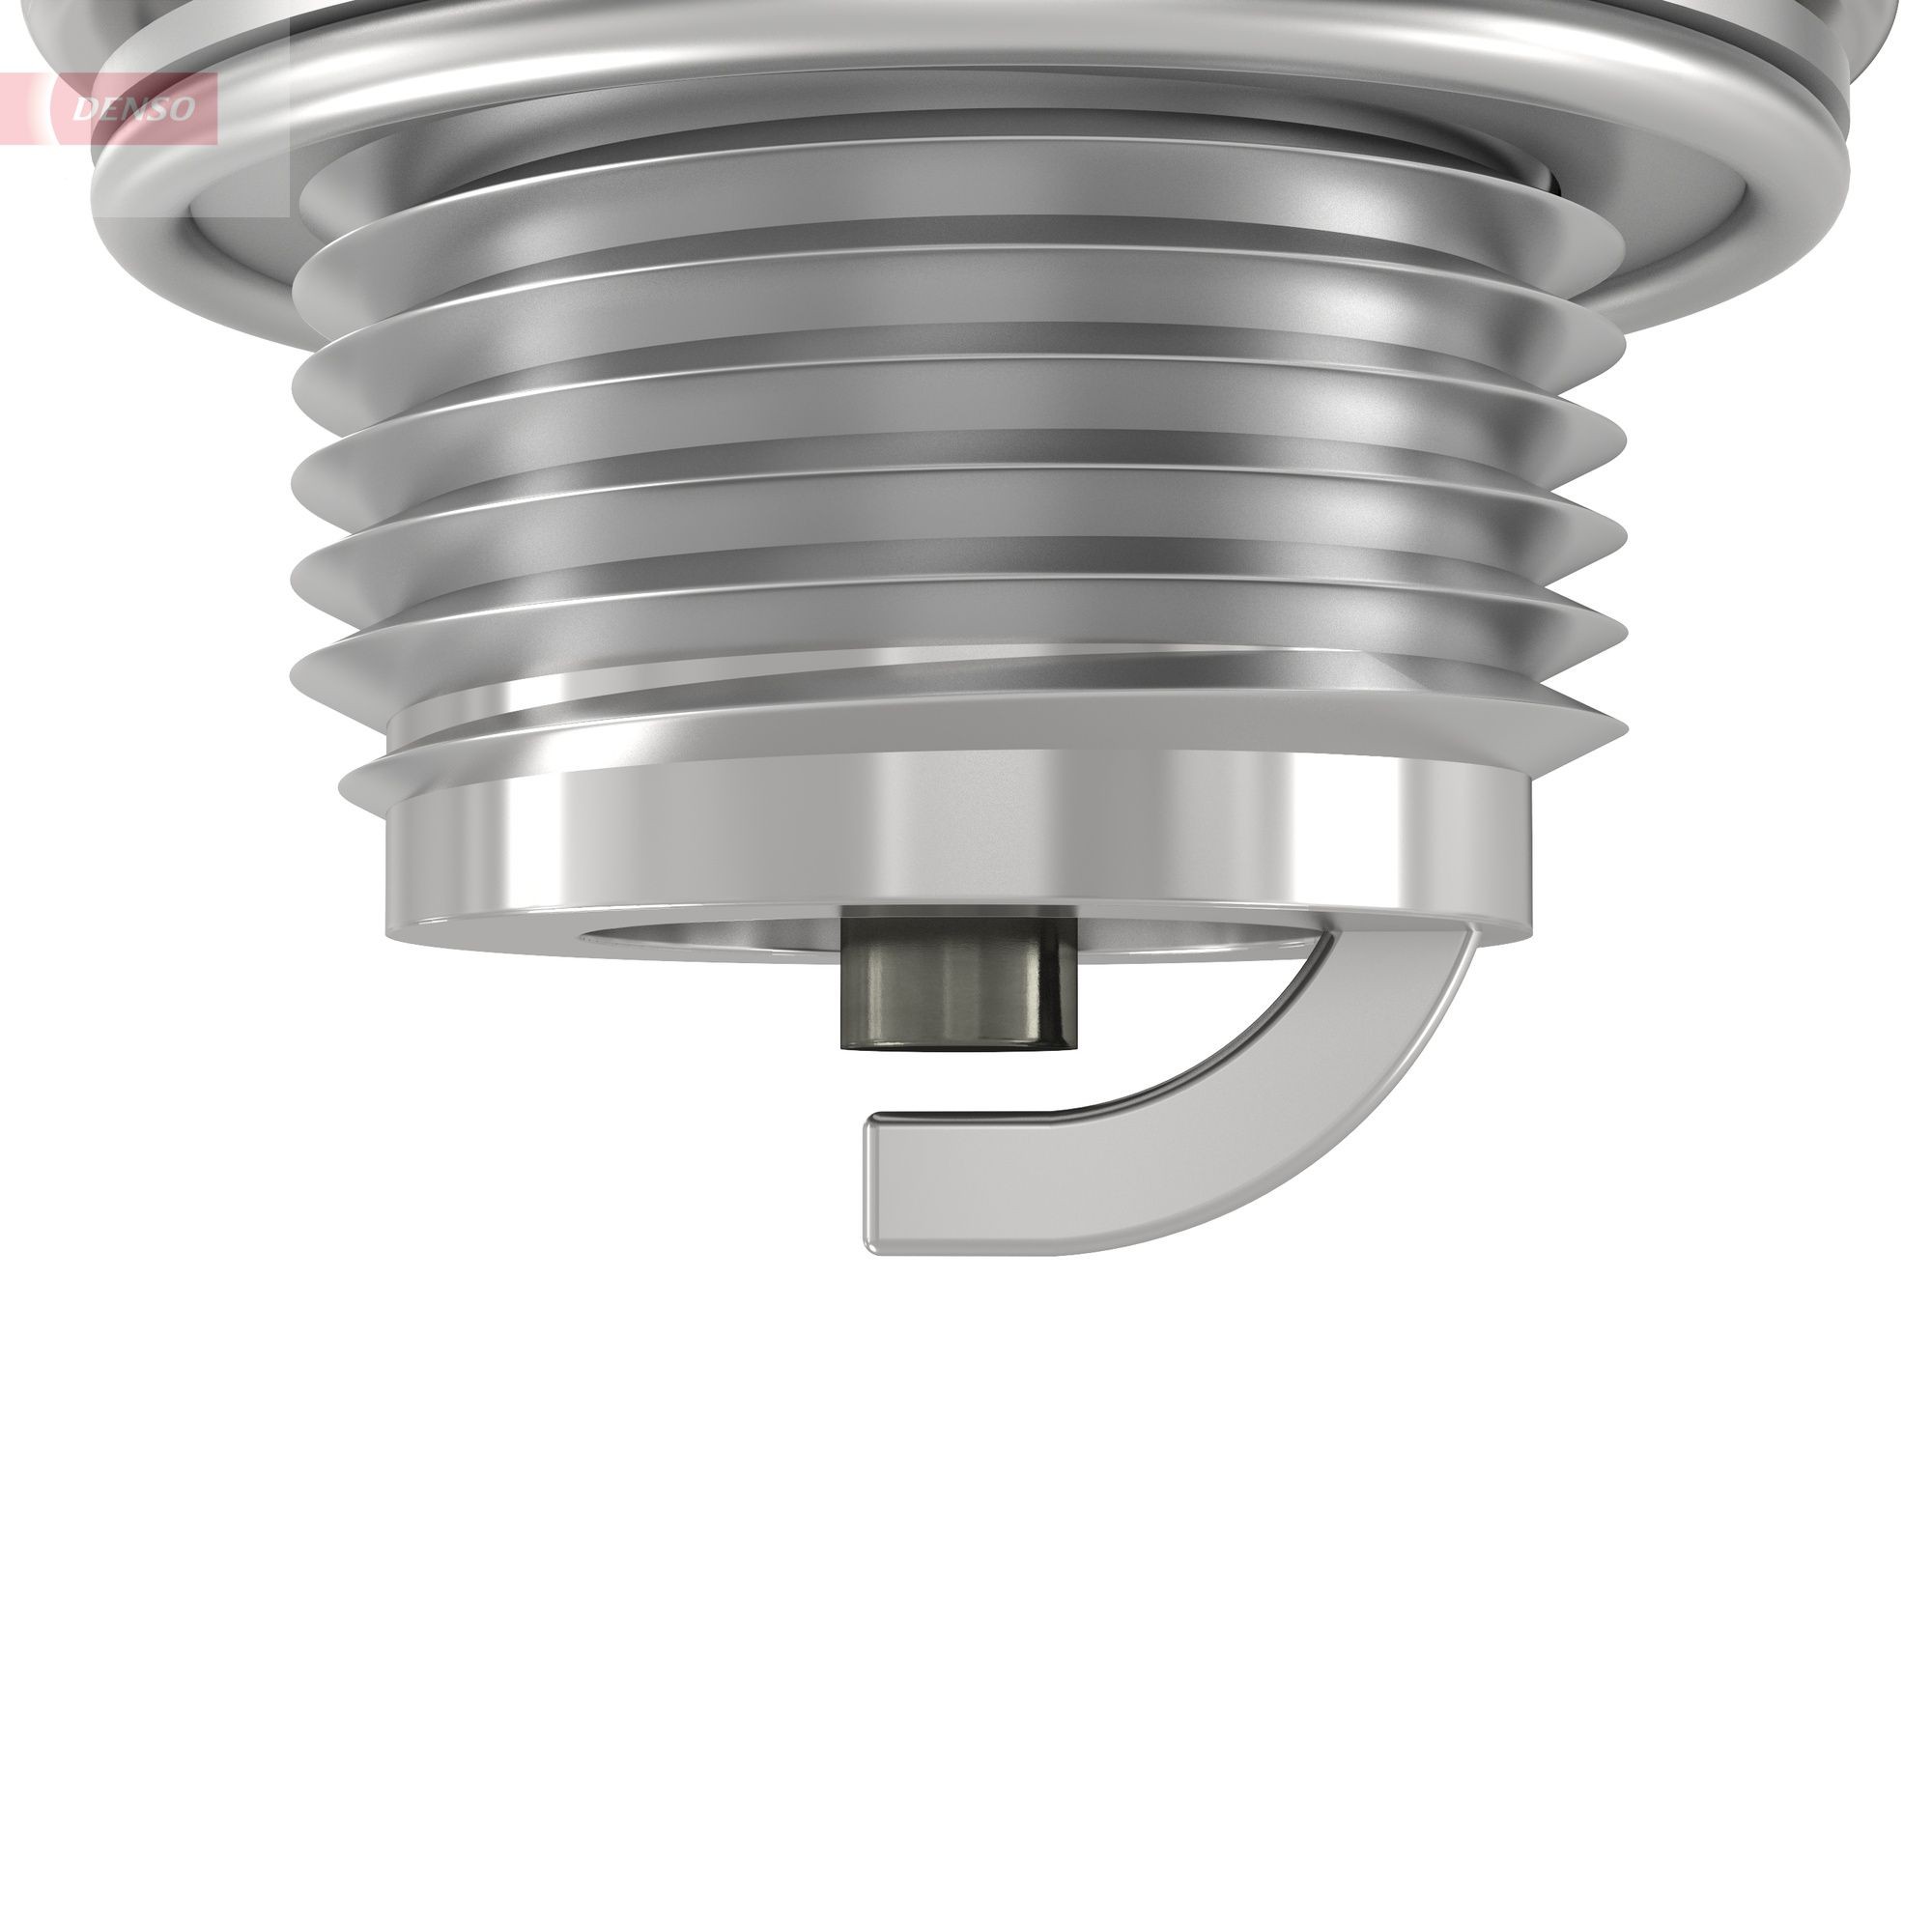 DENSO Nickel W22S-U Spark plug Spanner Size: 20.6